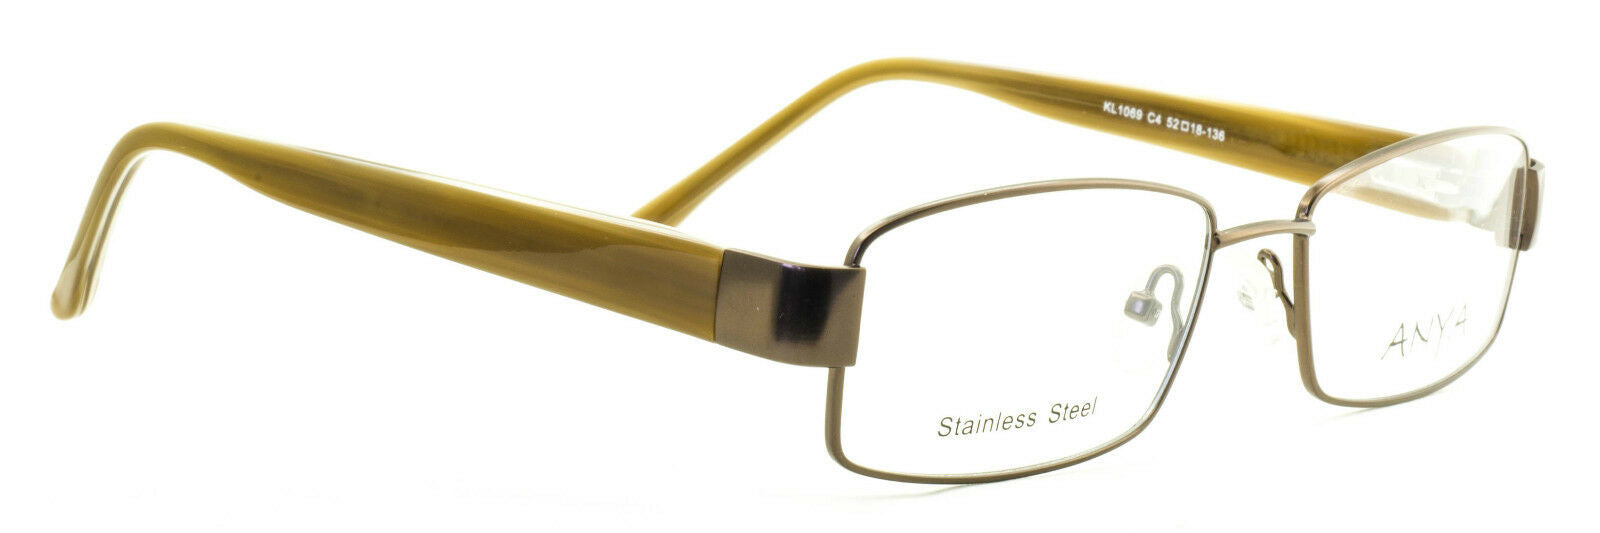 ANYA KL 1069 C4 RX Optical FRAMES - NEW Glasses Eyewear Eyeglasses - TRUSTED